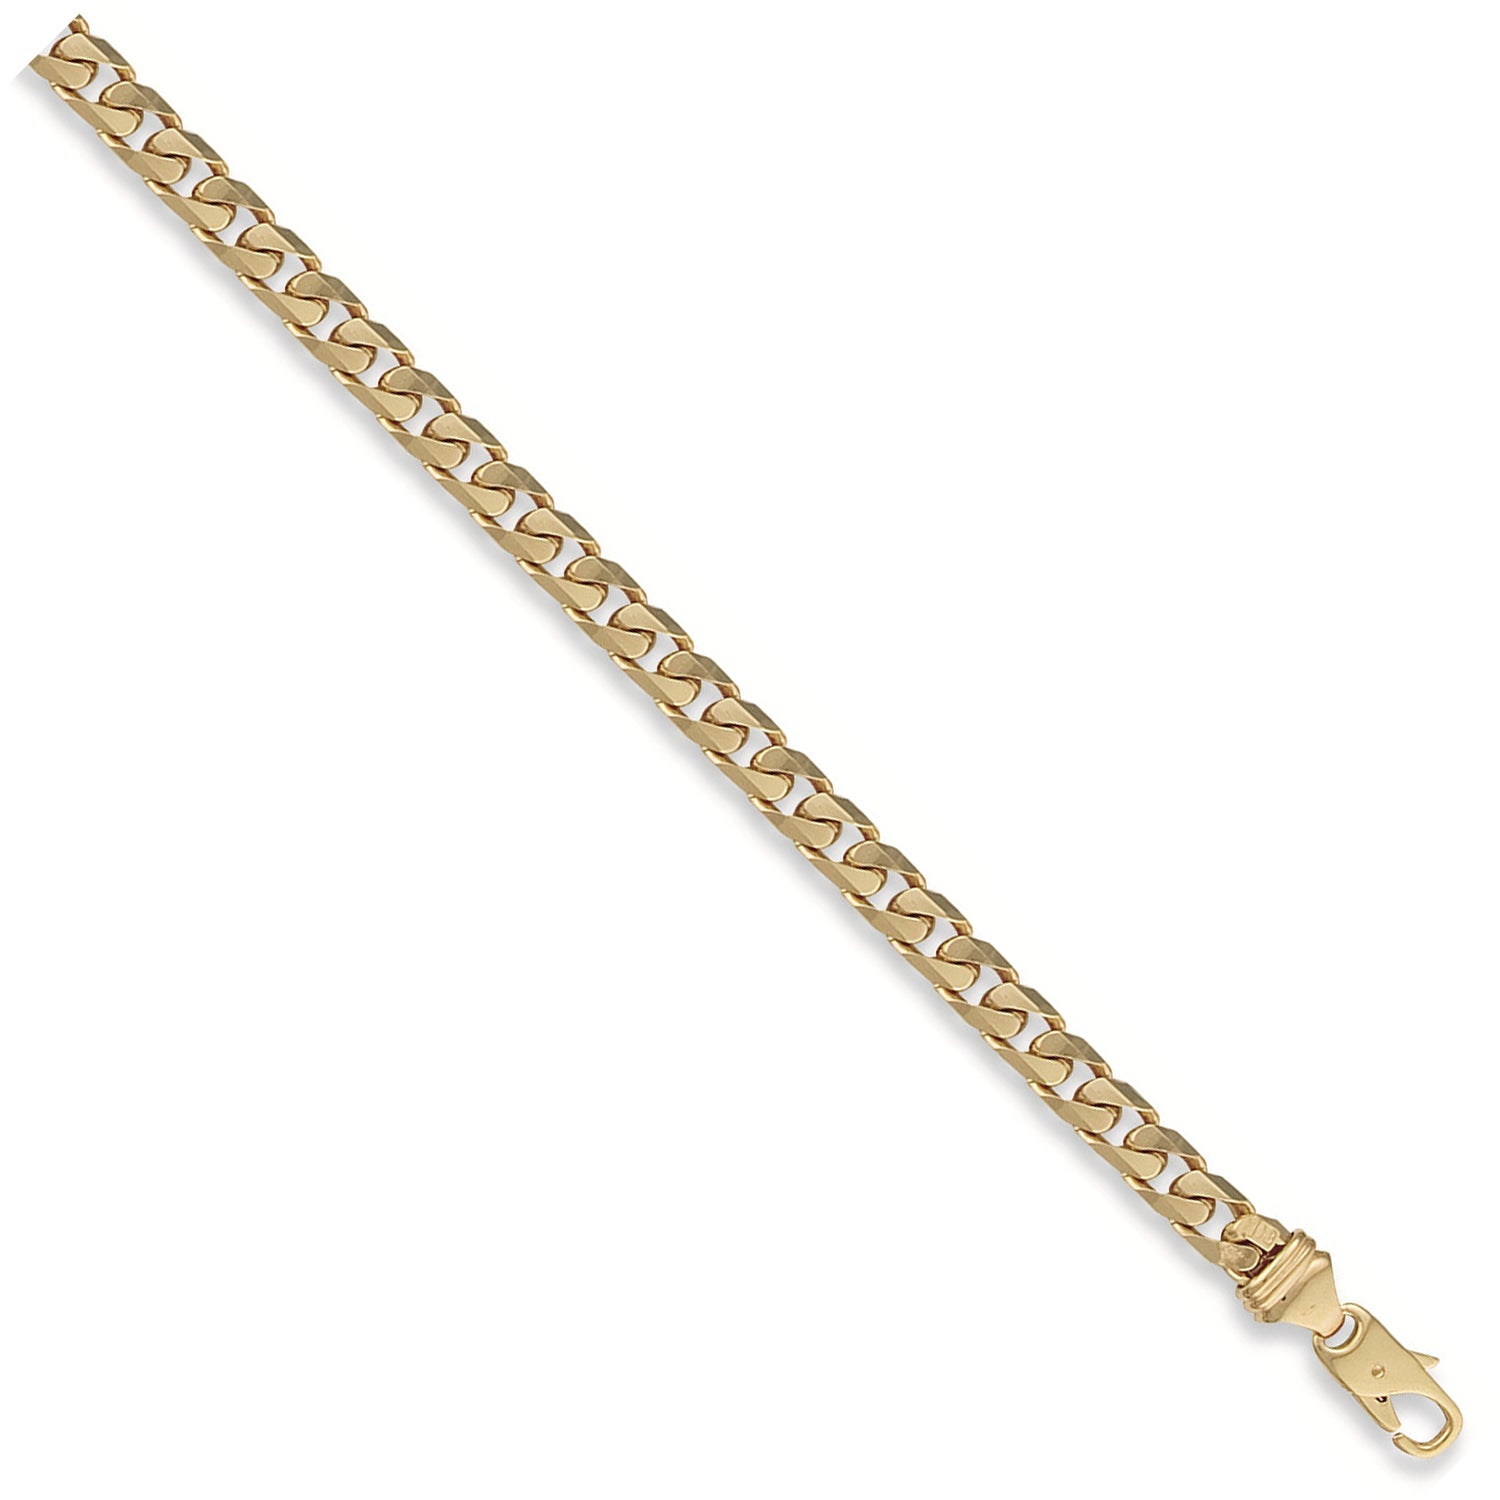 Solid 9ct Gold Curb Link Bracelet | 8 Inch